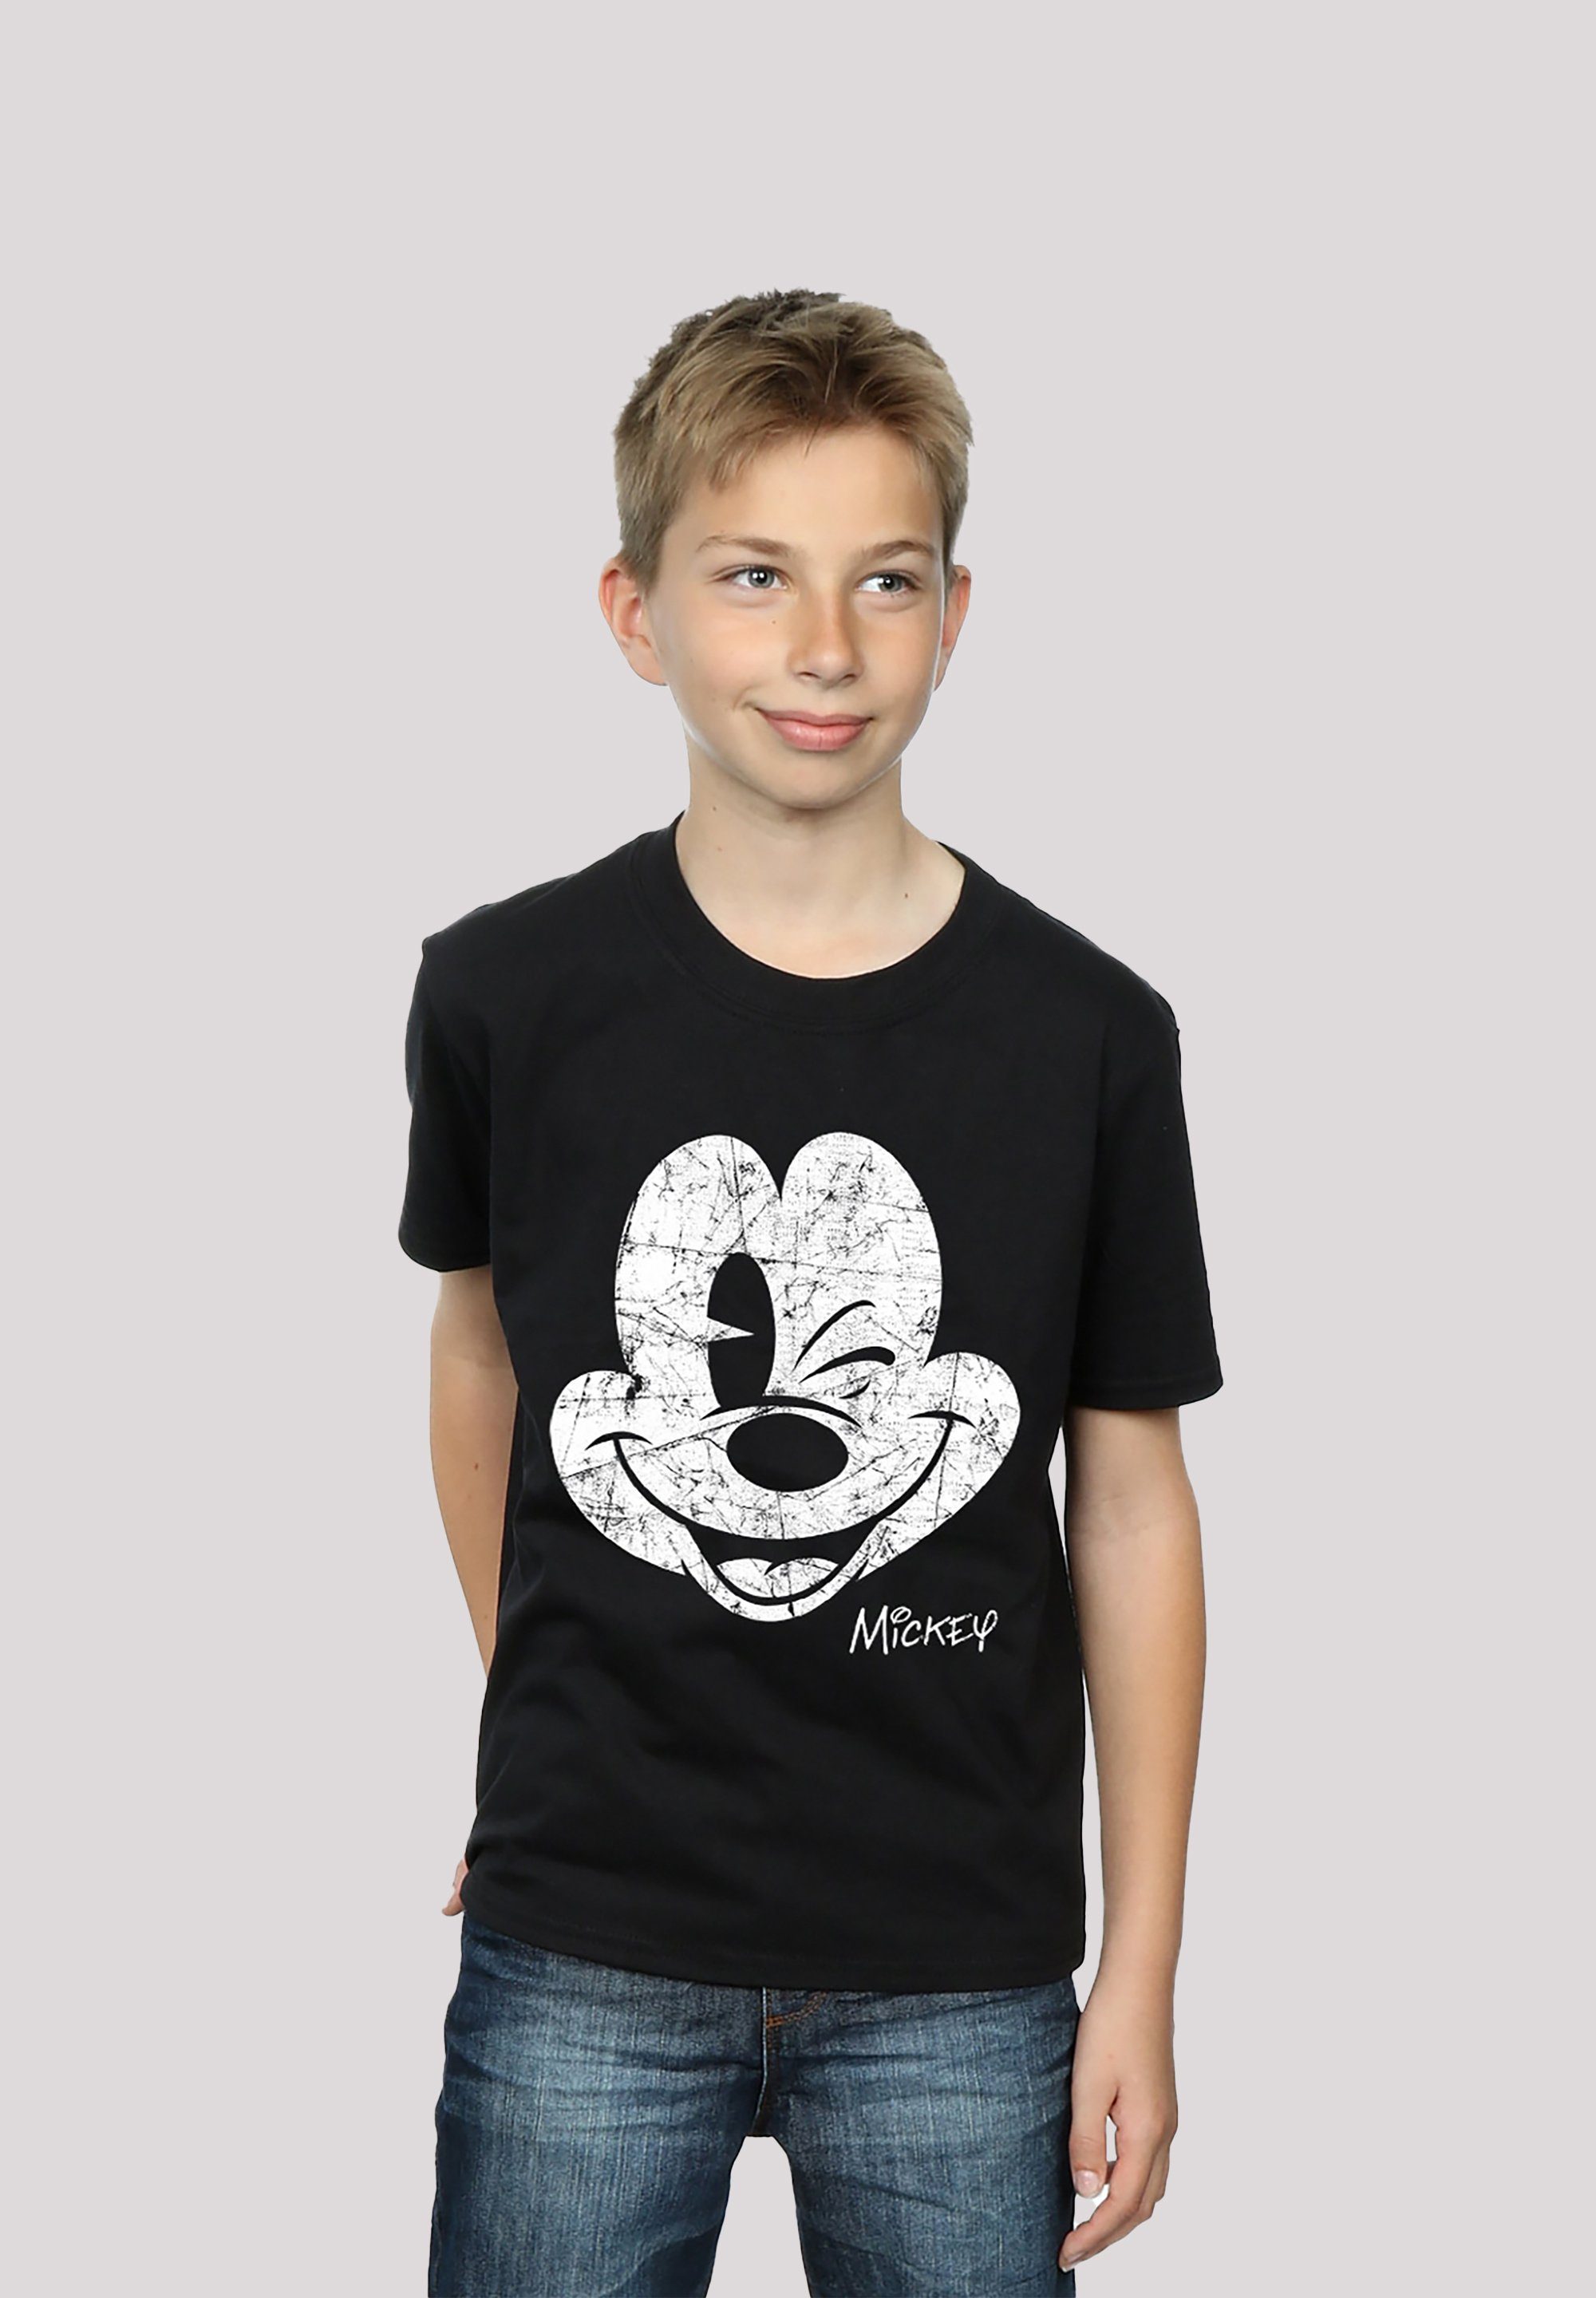 F4NT4STIC T-Shirt Disney Micky Maus MICKEY Unisex Kinder,Premium Merch,Jungen,Mädchen,Bedruckt